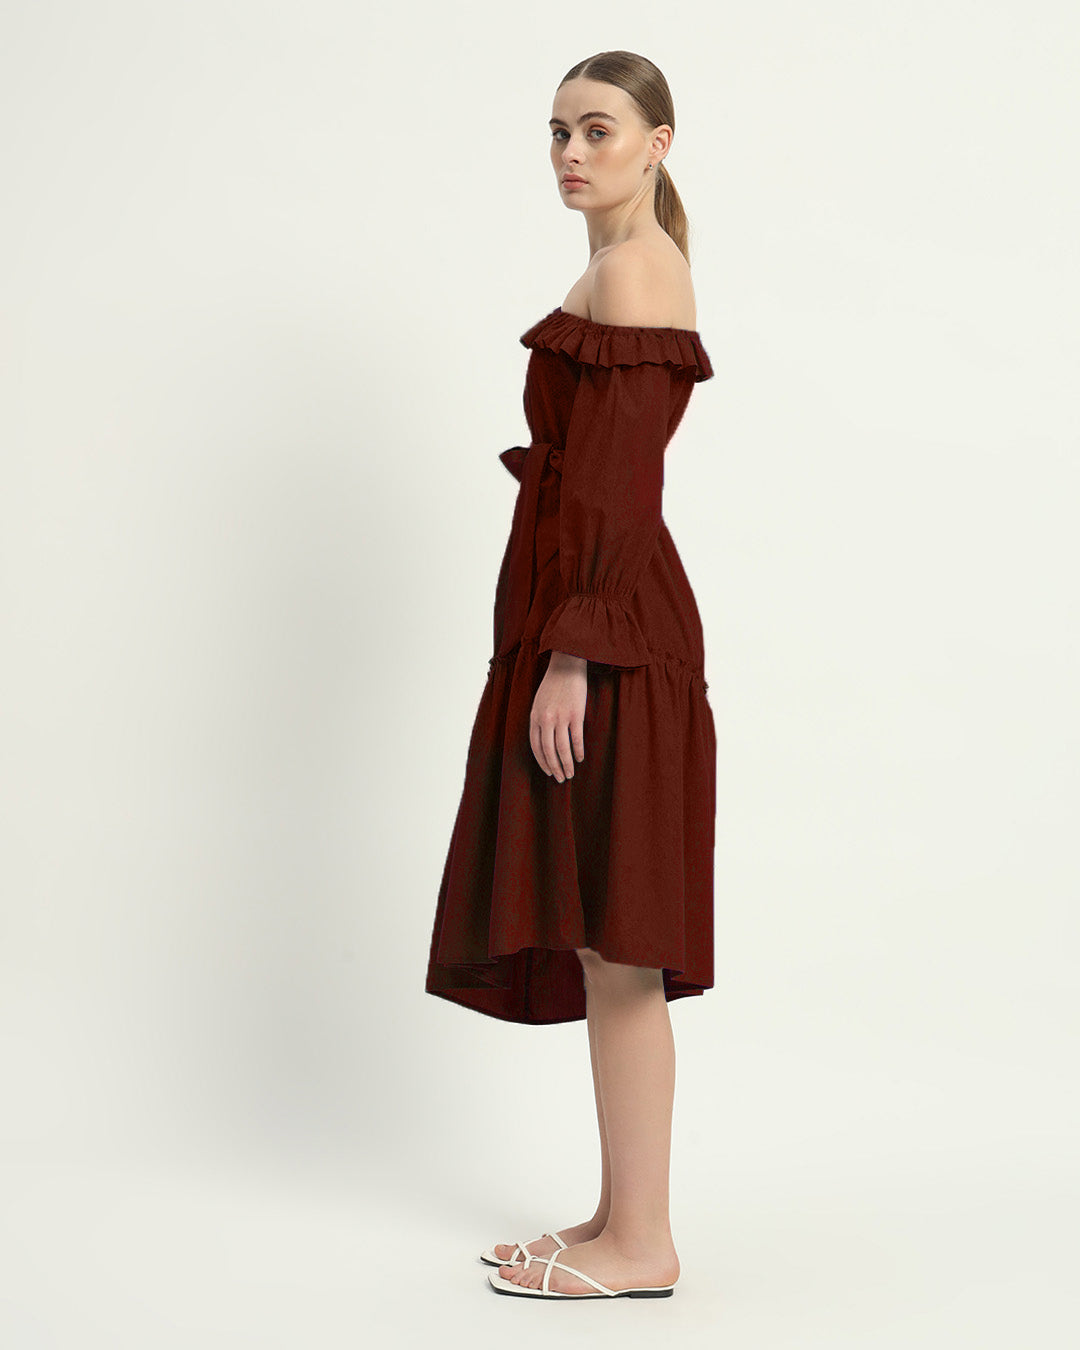 The Rouge Stellata Cotton Dress